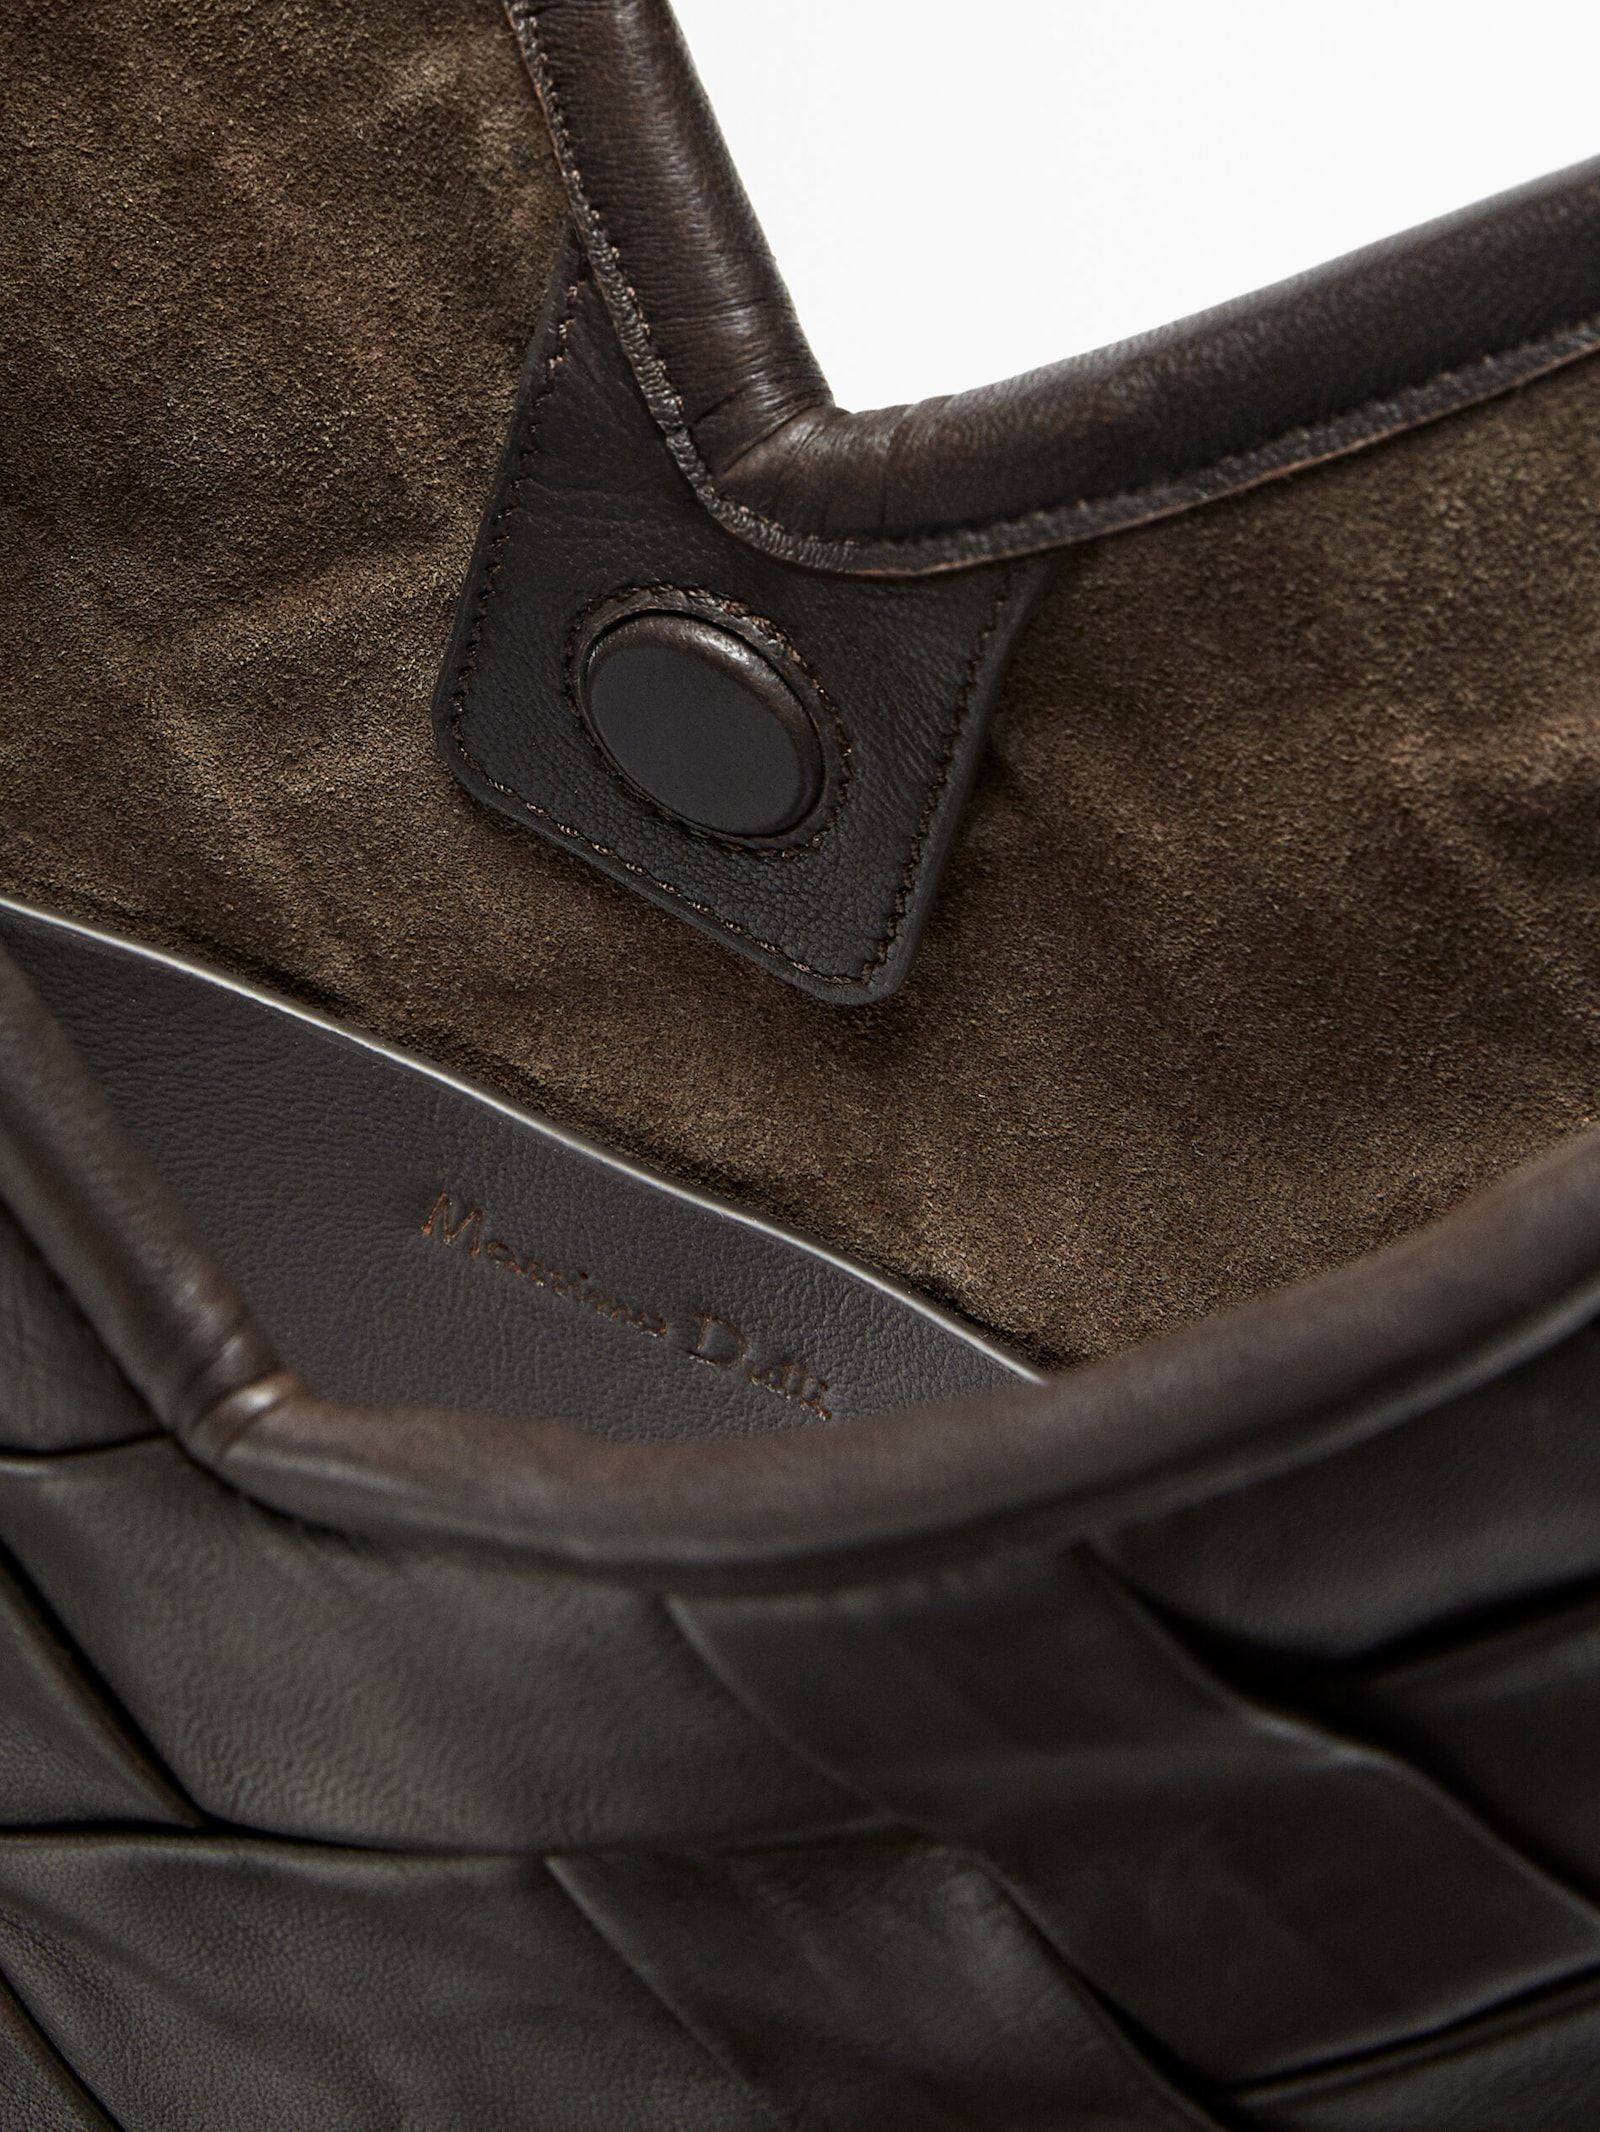 Woven nappa leather V-shaped crossbody bag | Massimo Dutti UK